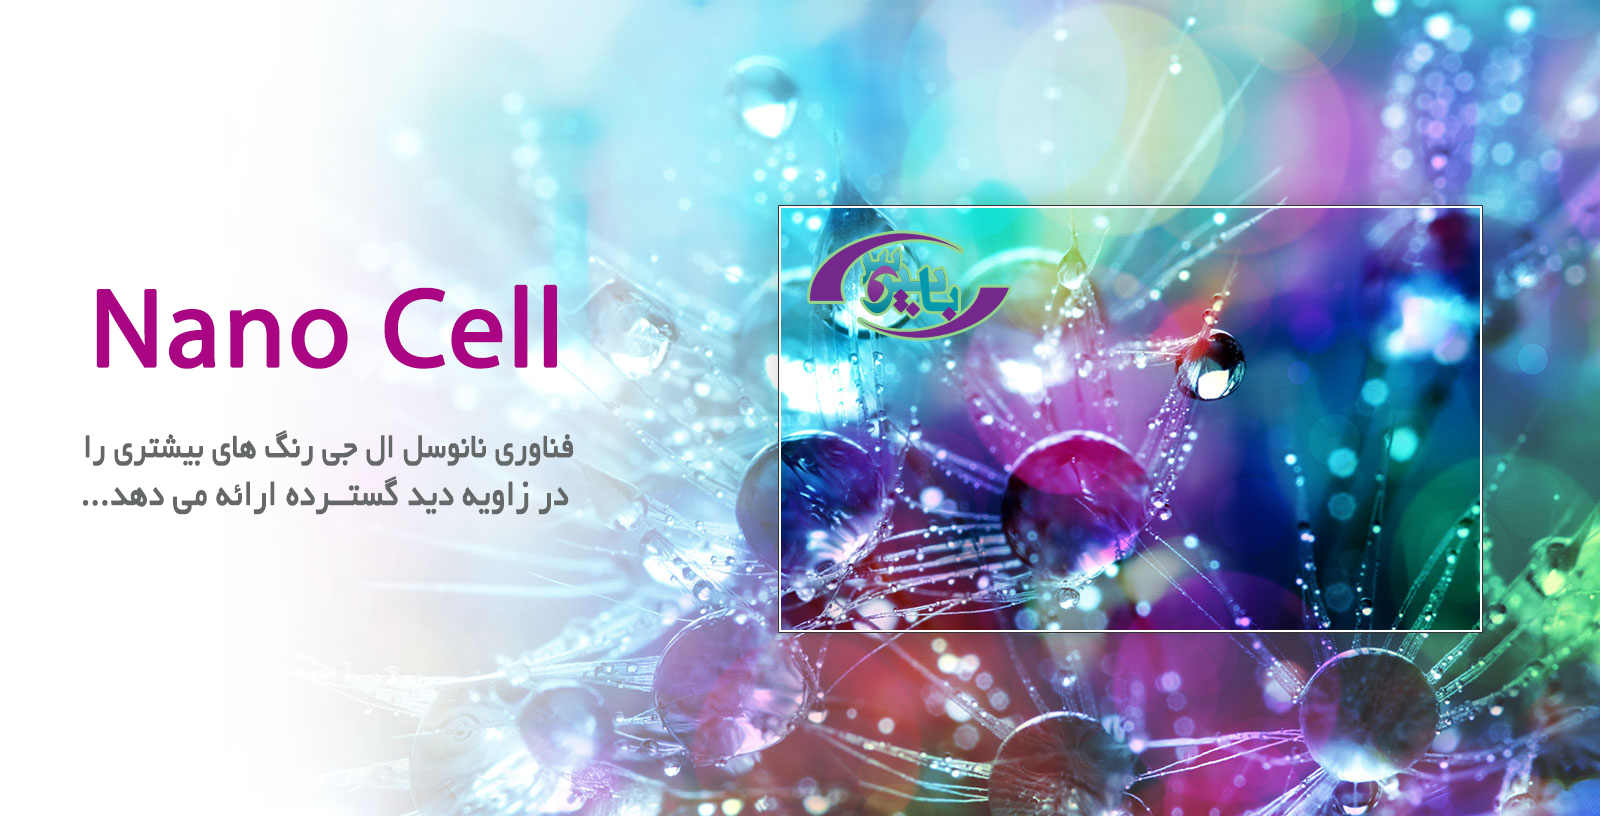 فناوری Nano Cell  ال جی